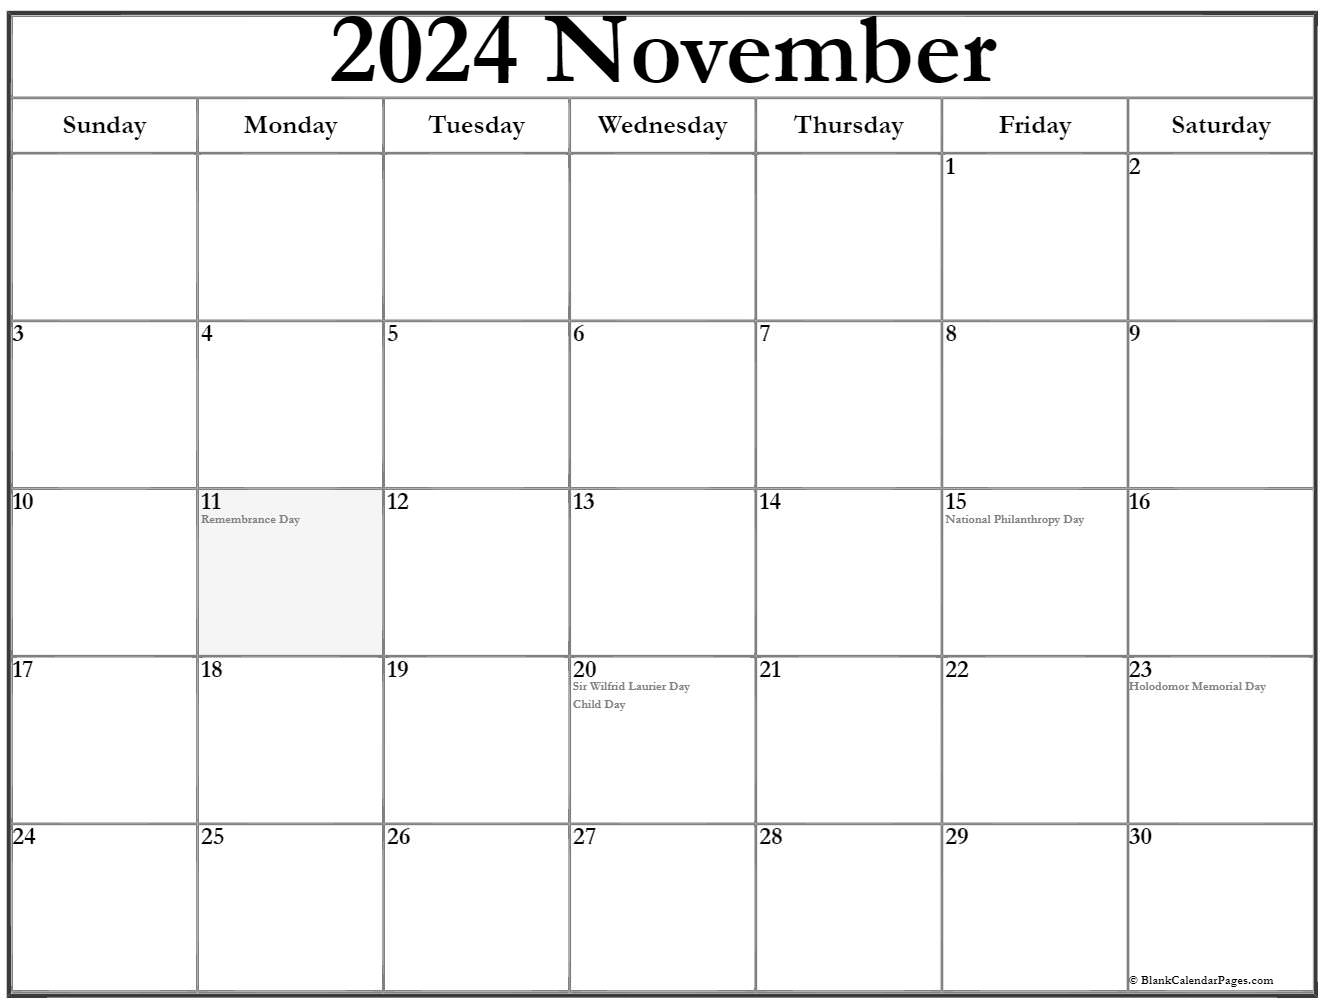 November 2021 calendar with holidays